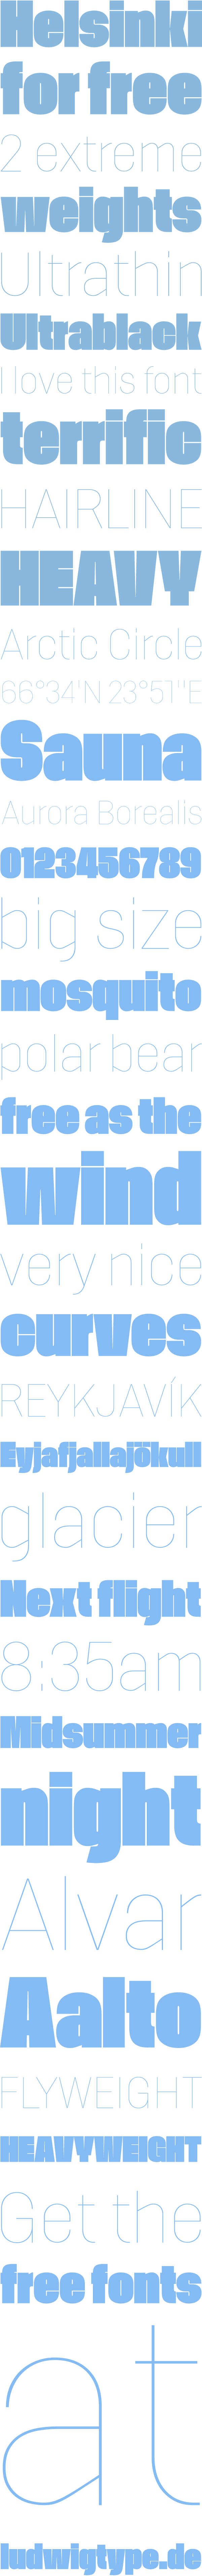 fonts free fonts free helsinki Display freebie Typeface type design geometric constructed